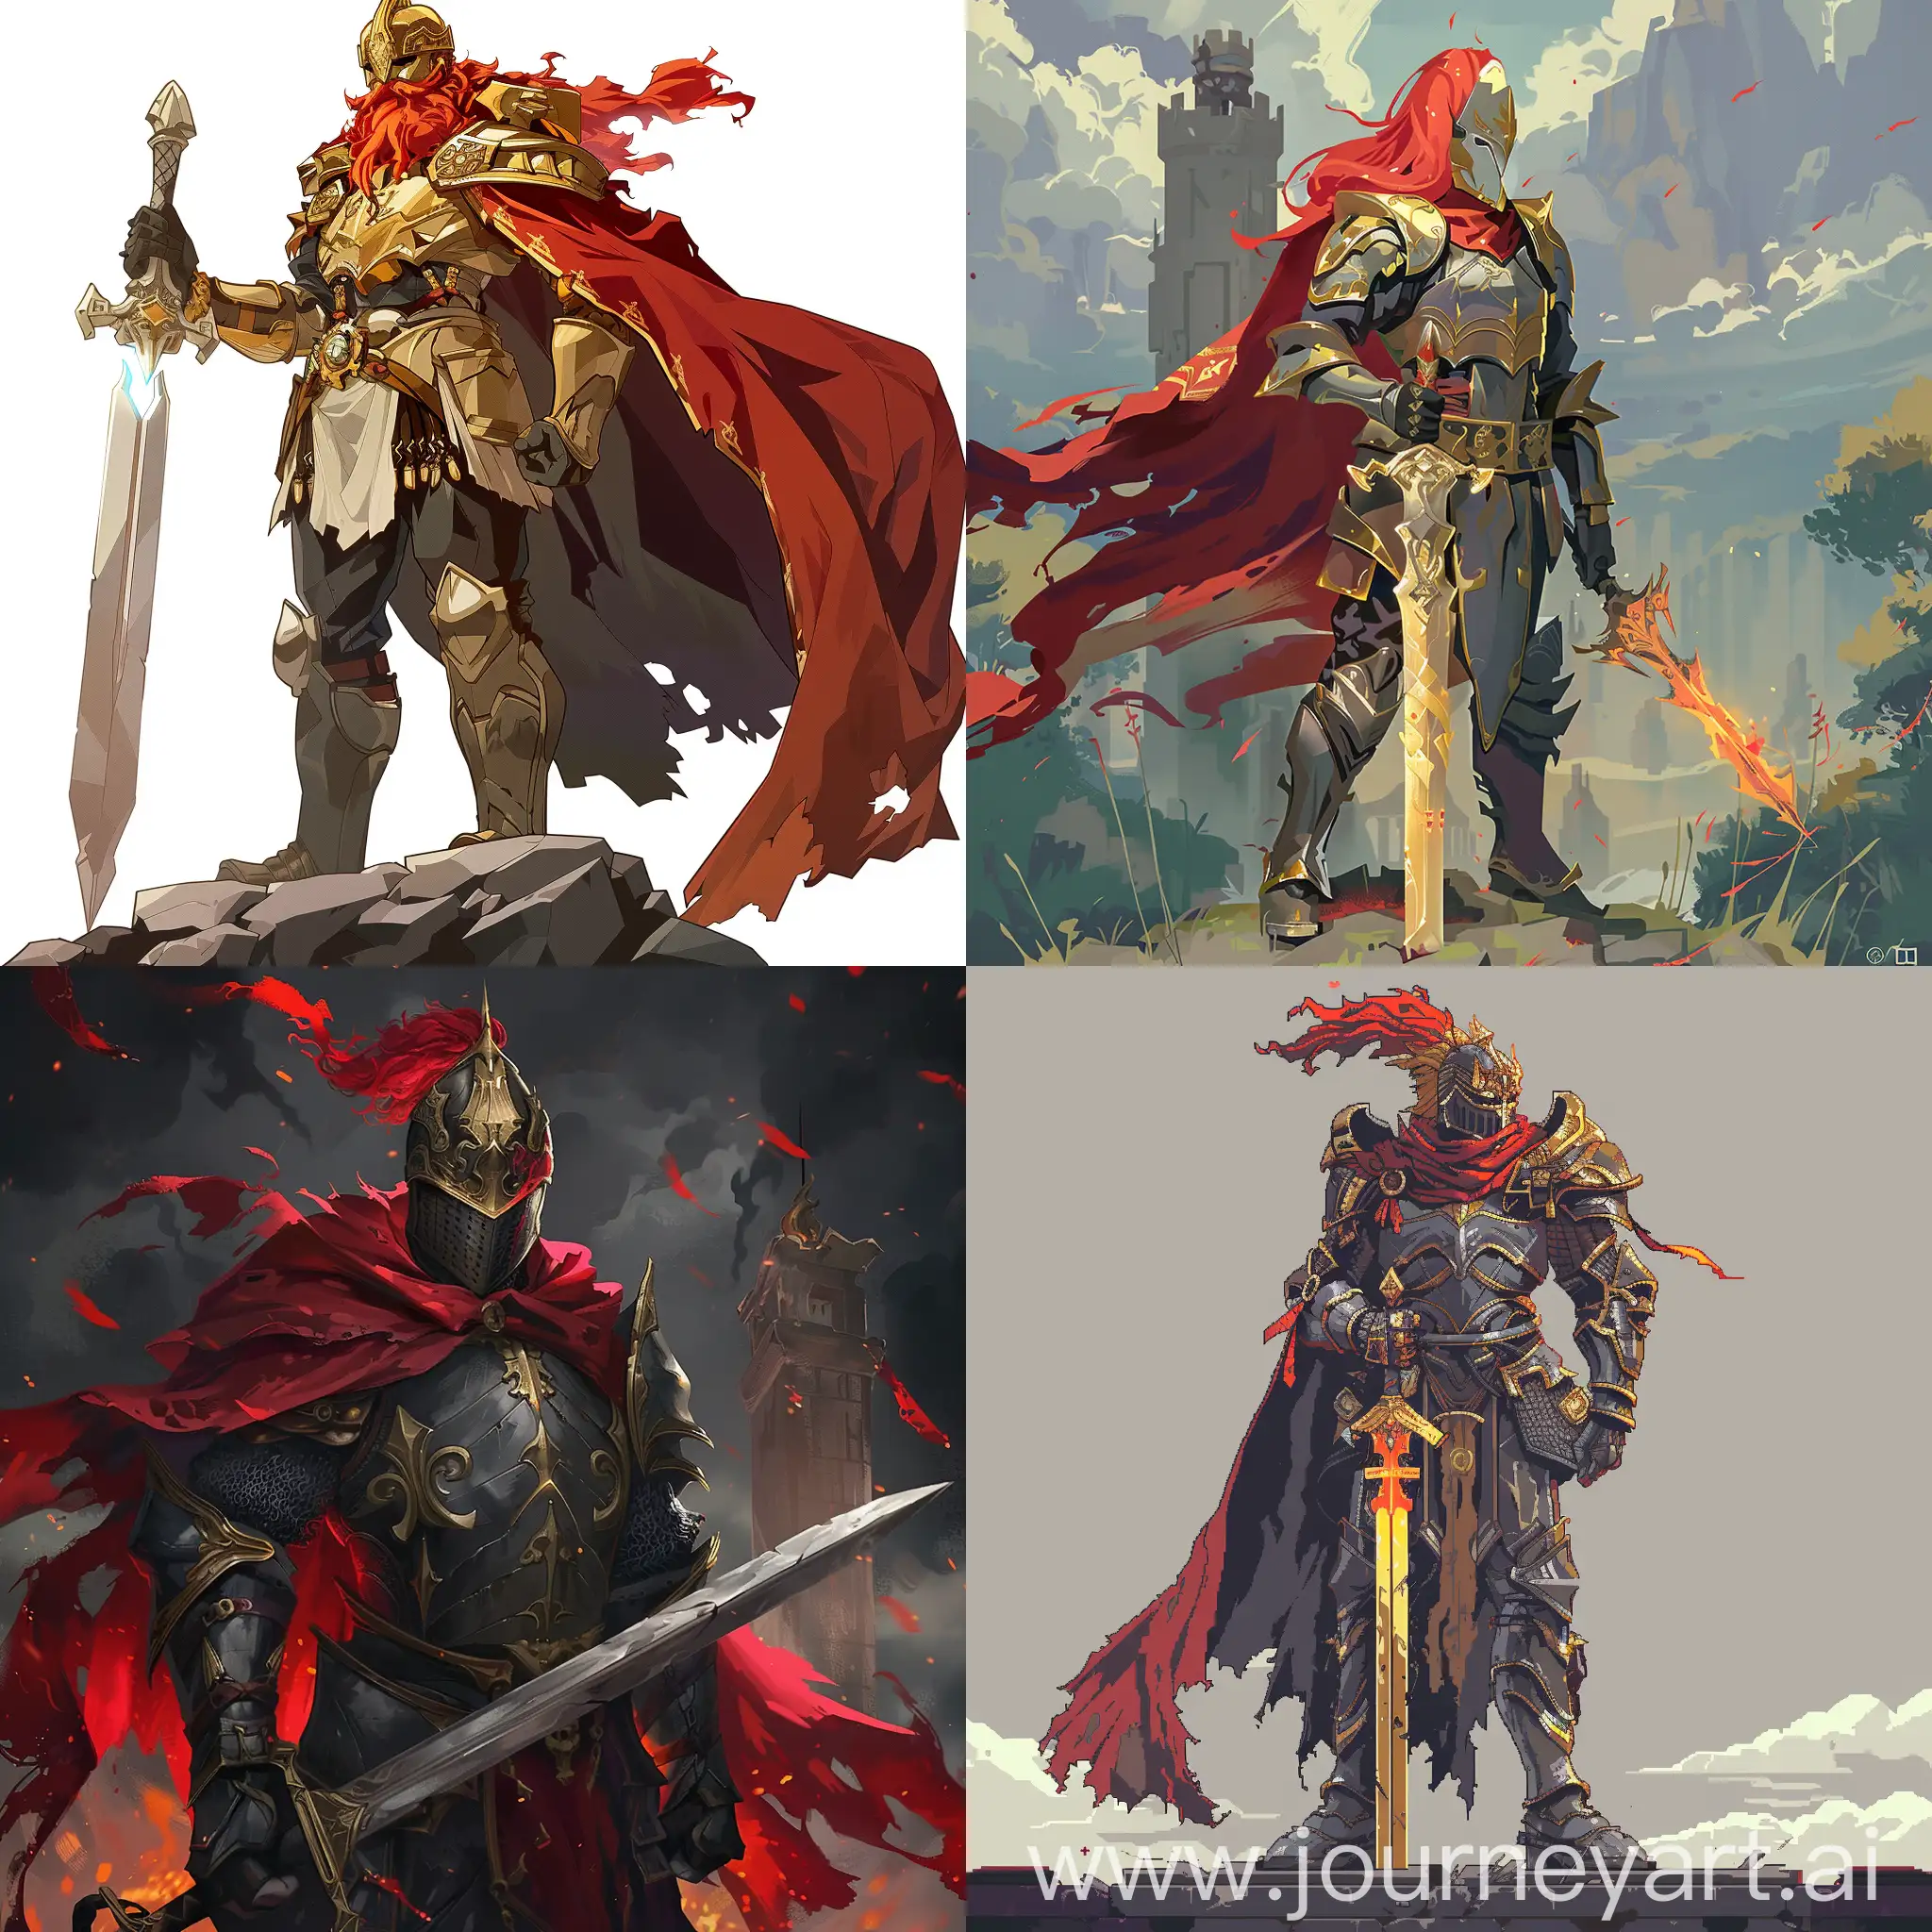 Roguelike-Boss-in-Valkyrie-Helmet-with-Fiery-Sword-atop-Kingdom-Tower